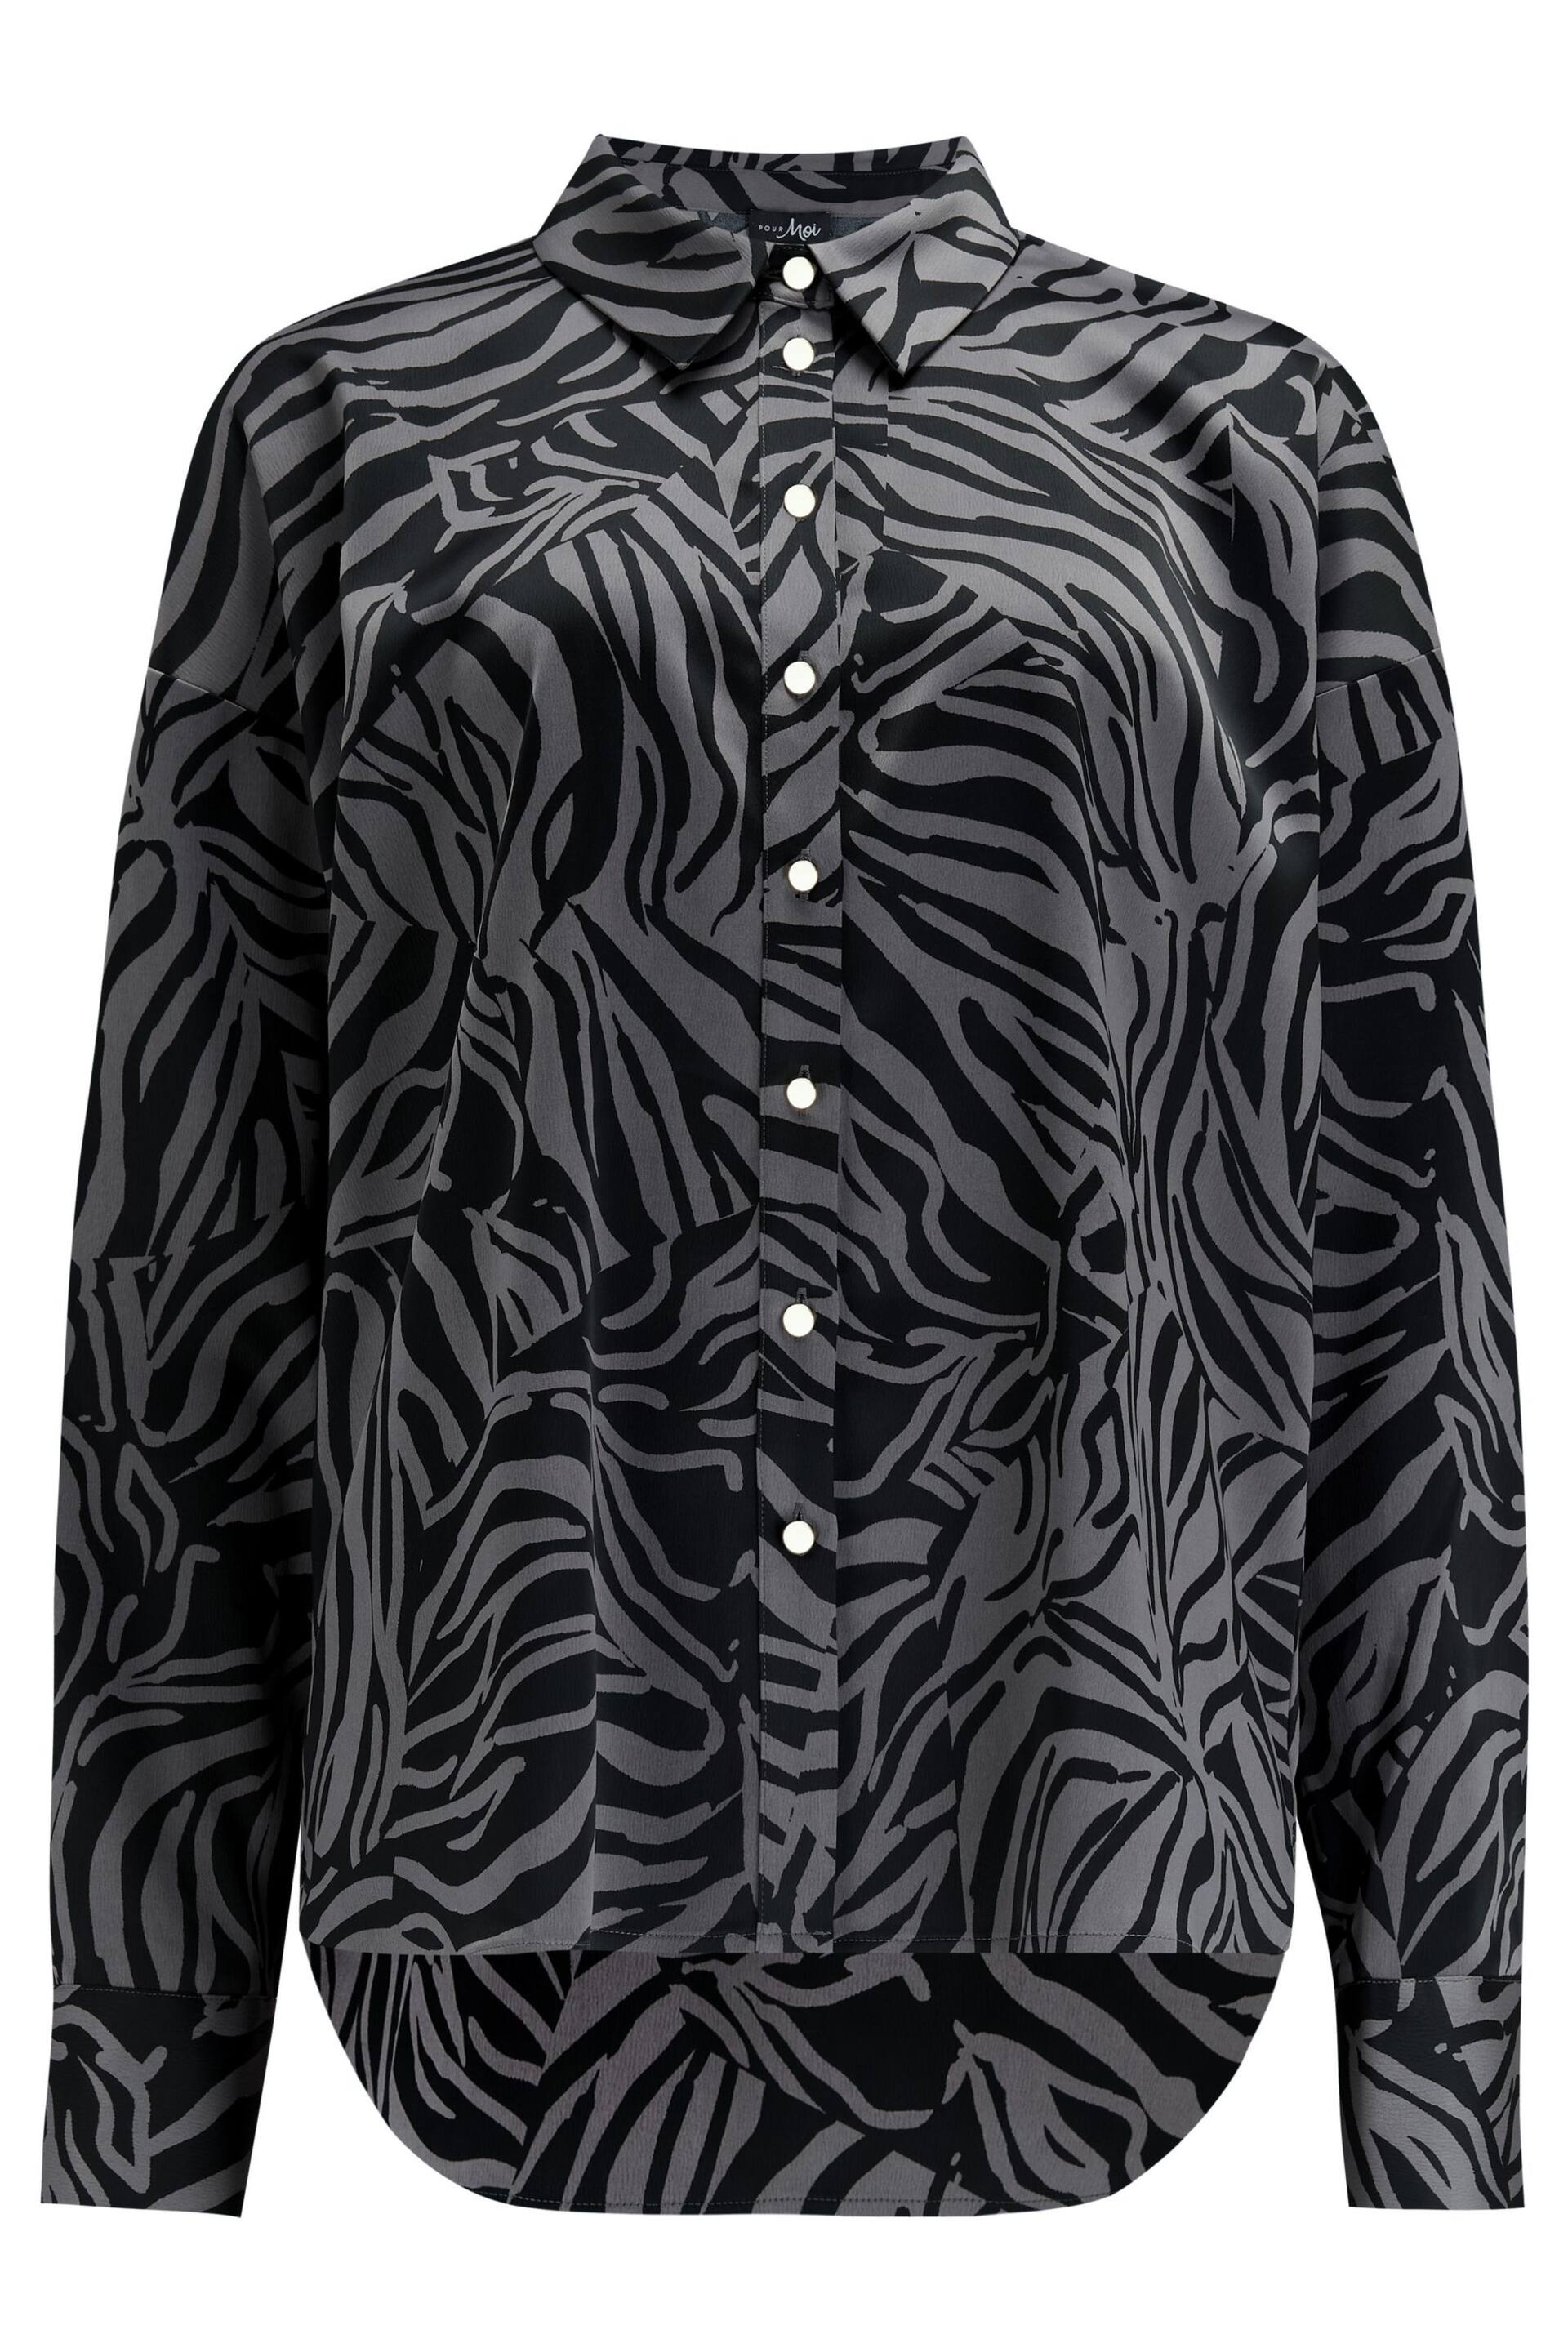 Pour Moi Black Rena Satin Oversized Long Sleeve Shirt - Image 3 of 4